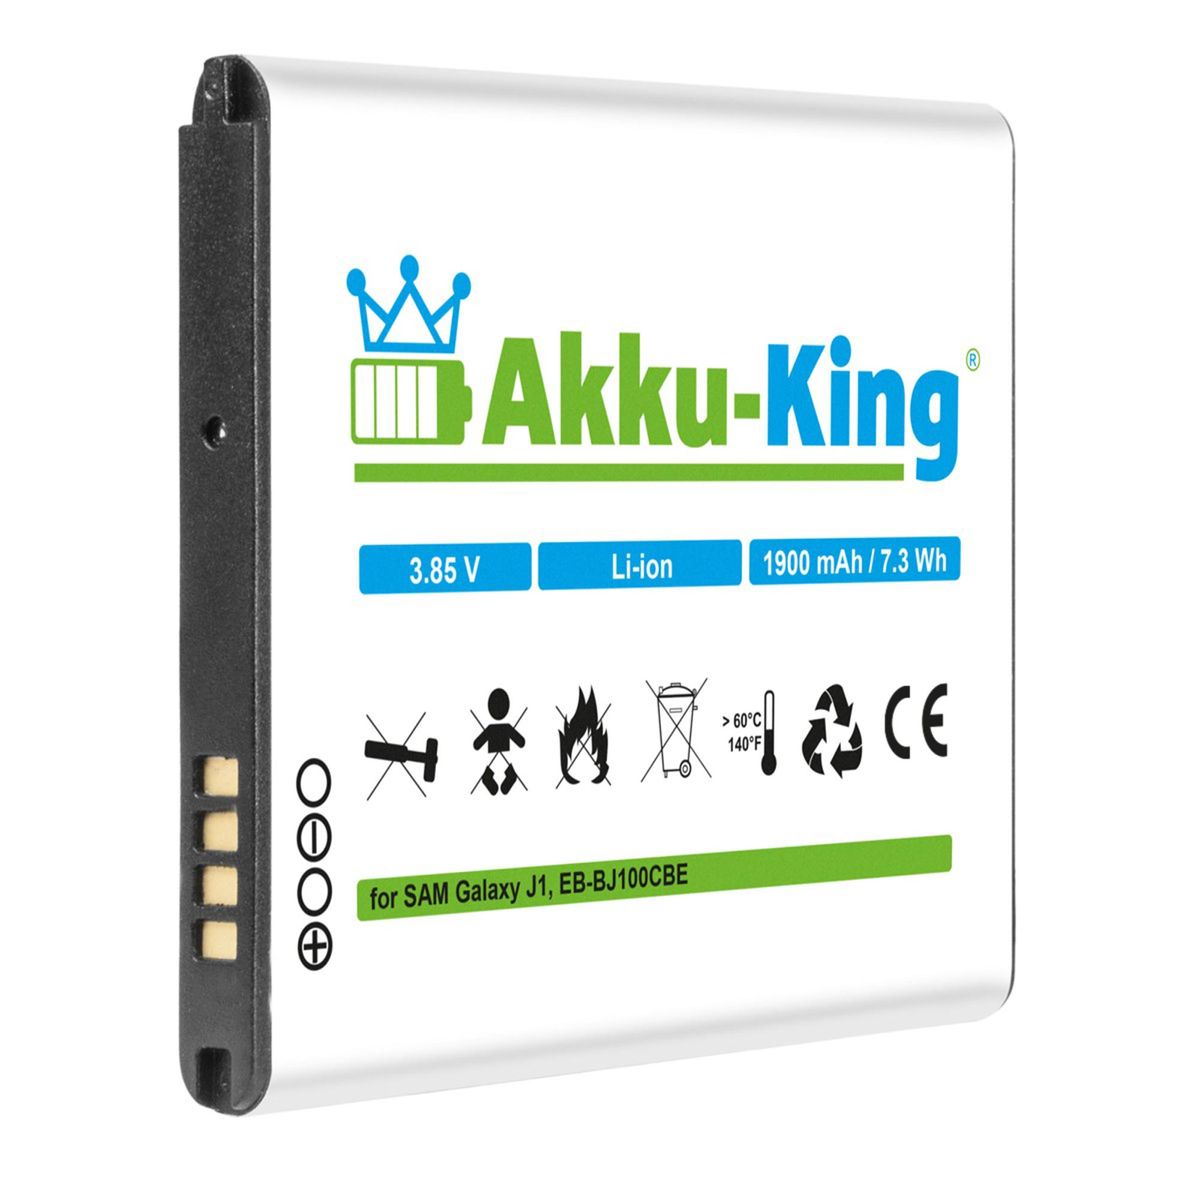 Akku kompatibel mit 1900mAh Handy-Akku, EB-BJ100CBE Volt, Li-Ion Samsung 3.7 AKKU-KING